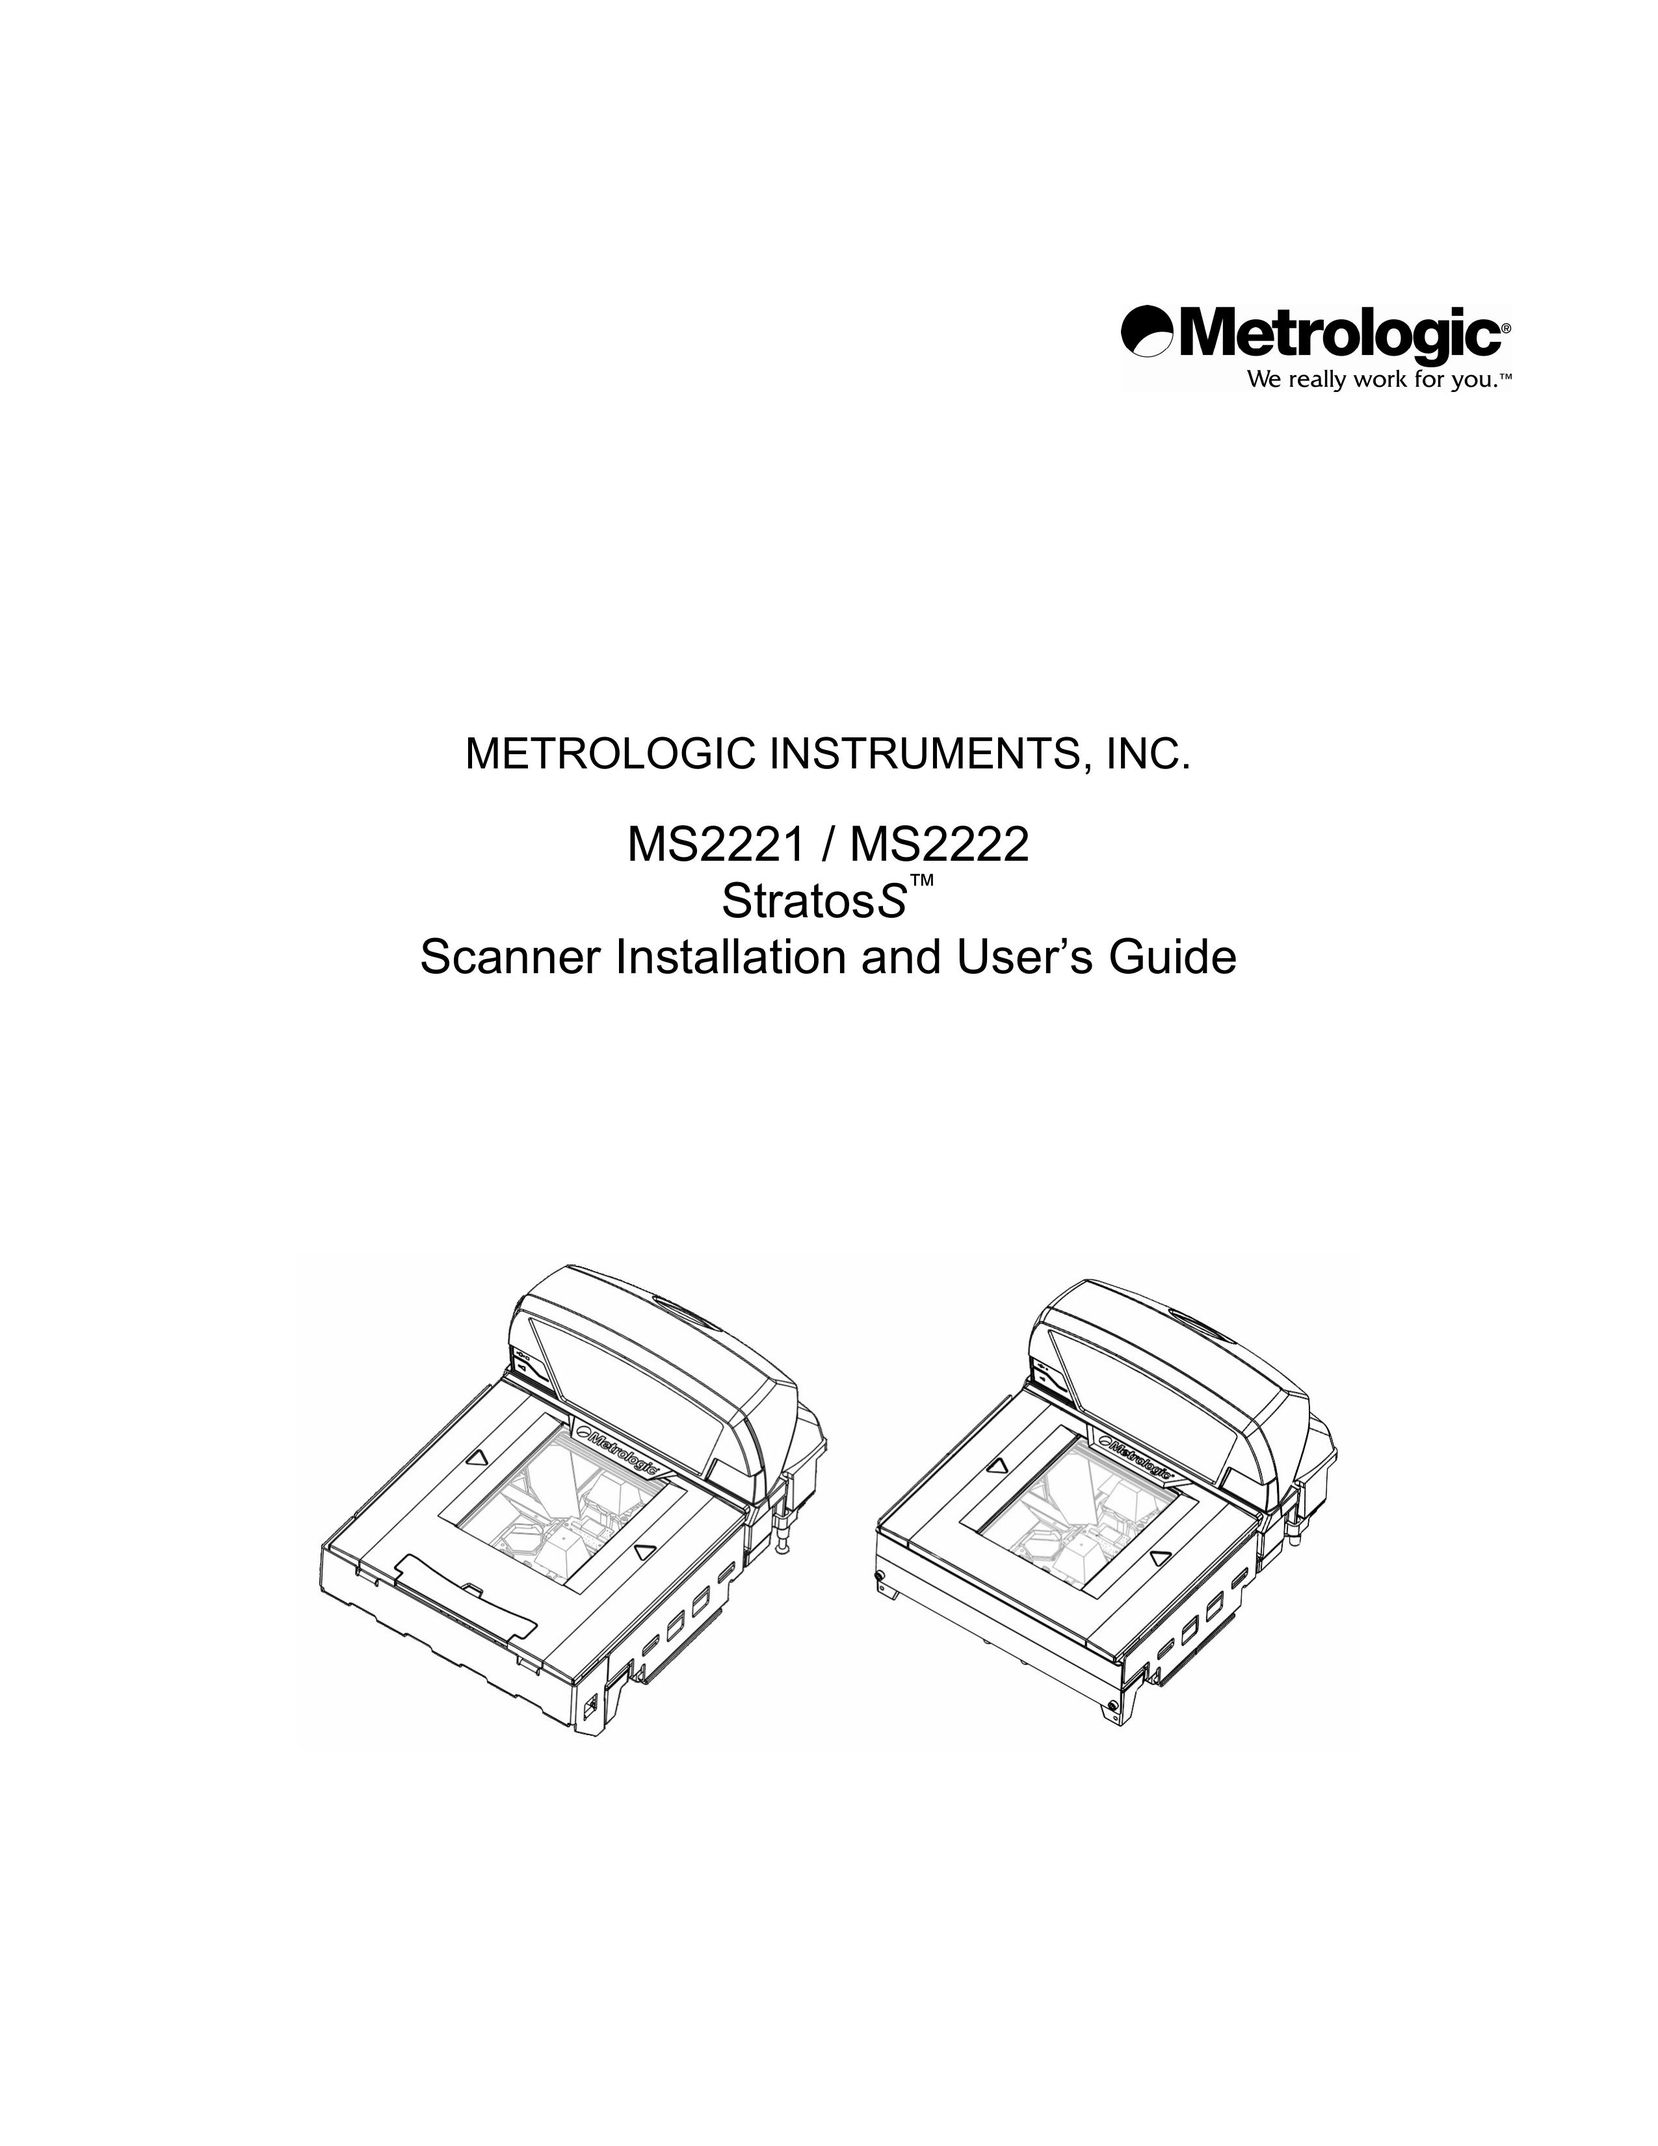 Metrologic Instruments MS2222 Scanner User Manual